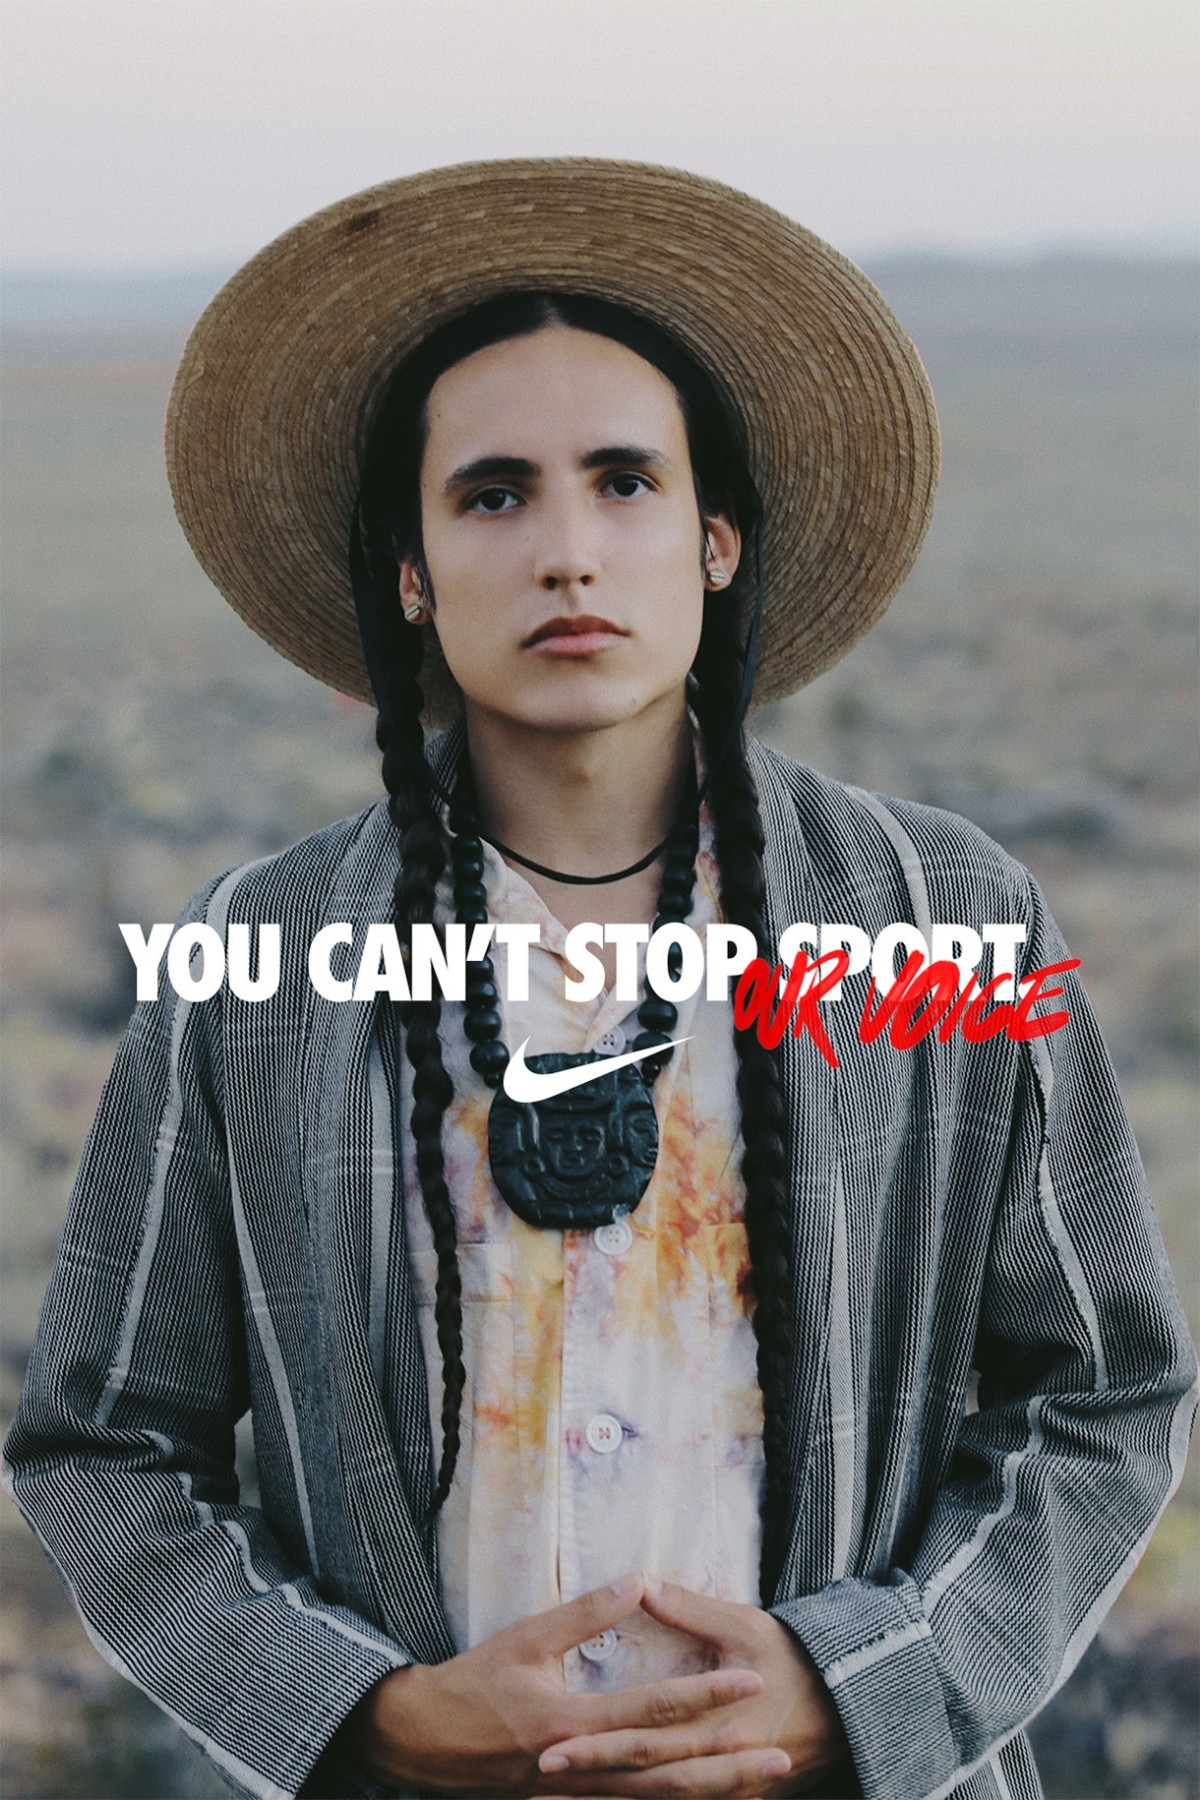 You can't stop sport / our voice - Nike swoosh - Xiuhtezcatl Martinez in desert